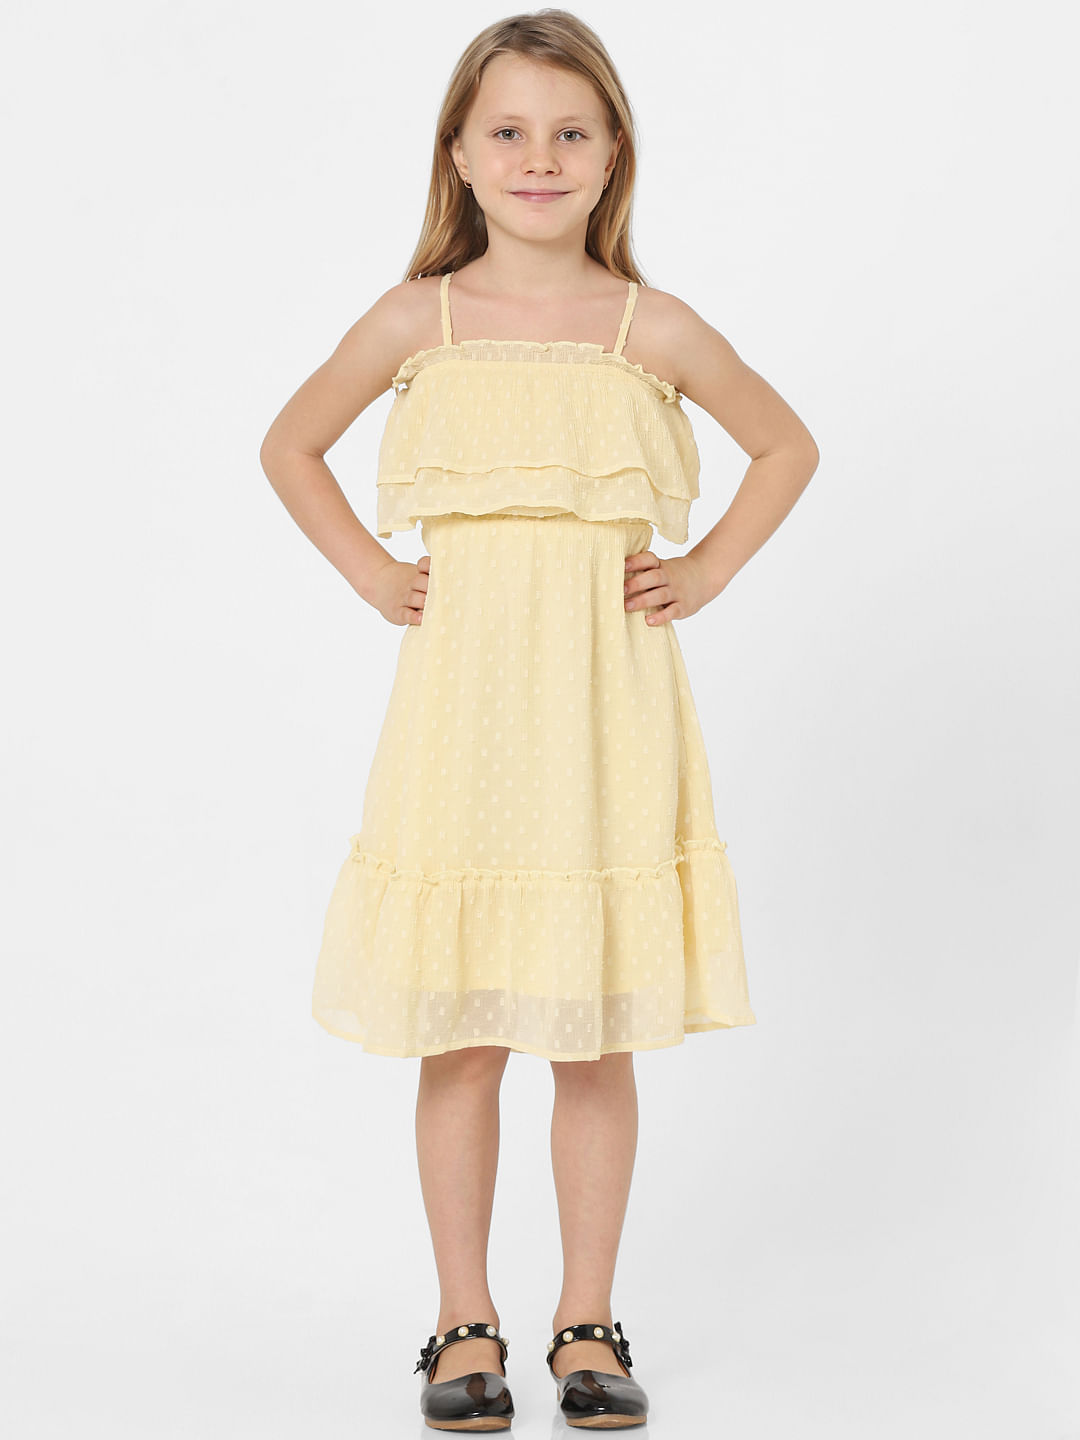 Buy Maurya Girls Wear Beautiful Gown for Girls (13-14 Years, Lemon Yellow)  at Amazon.in